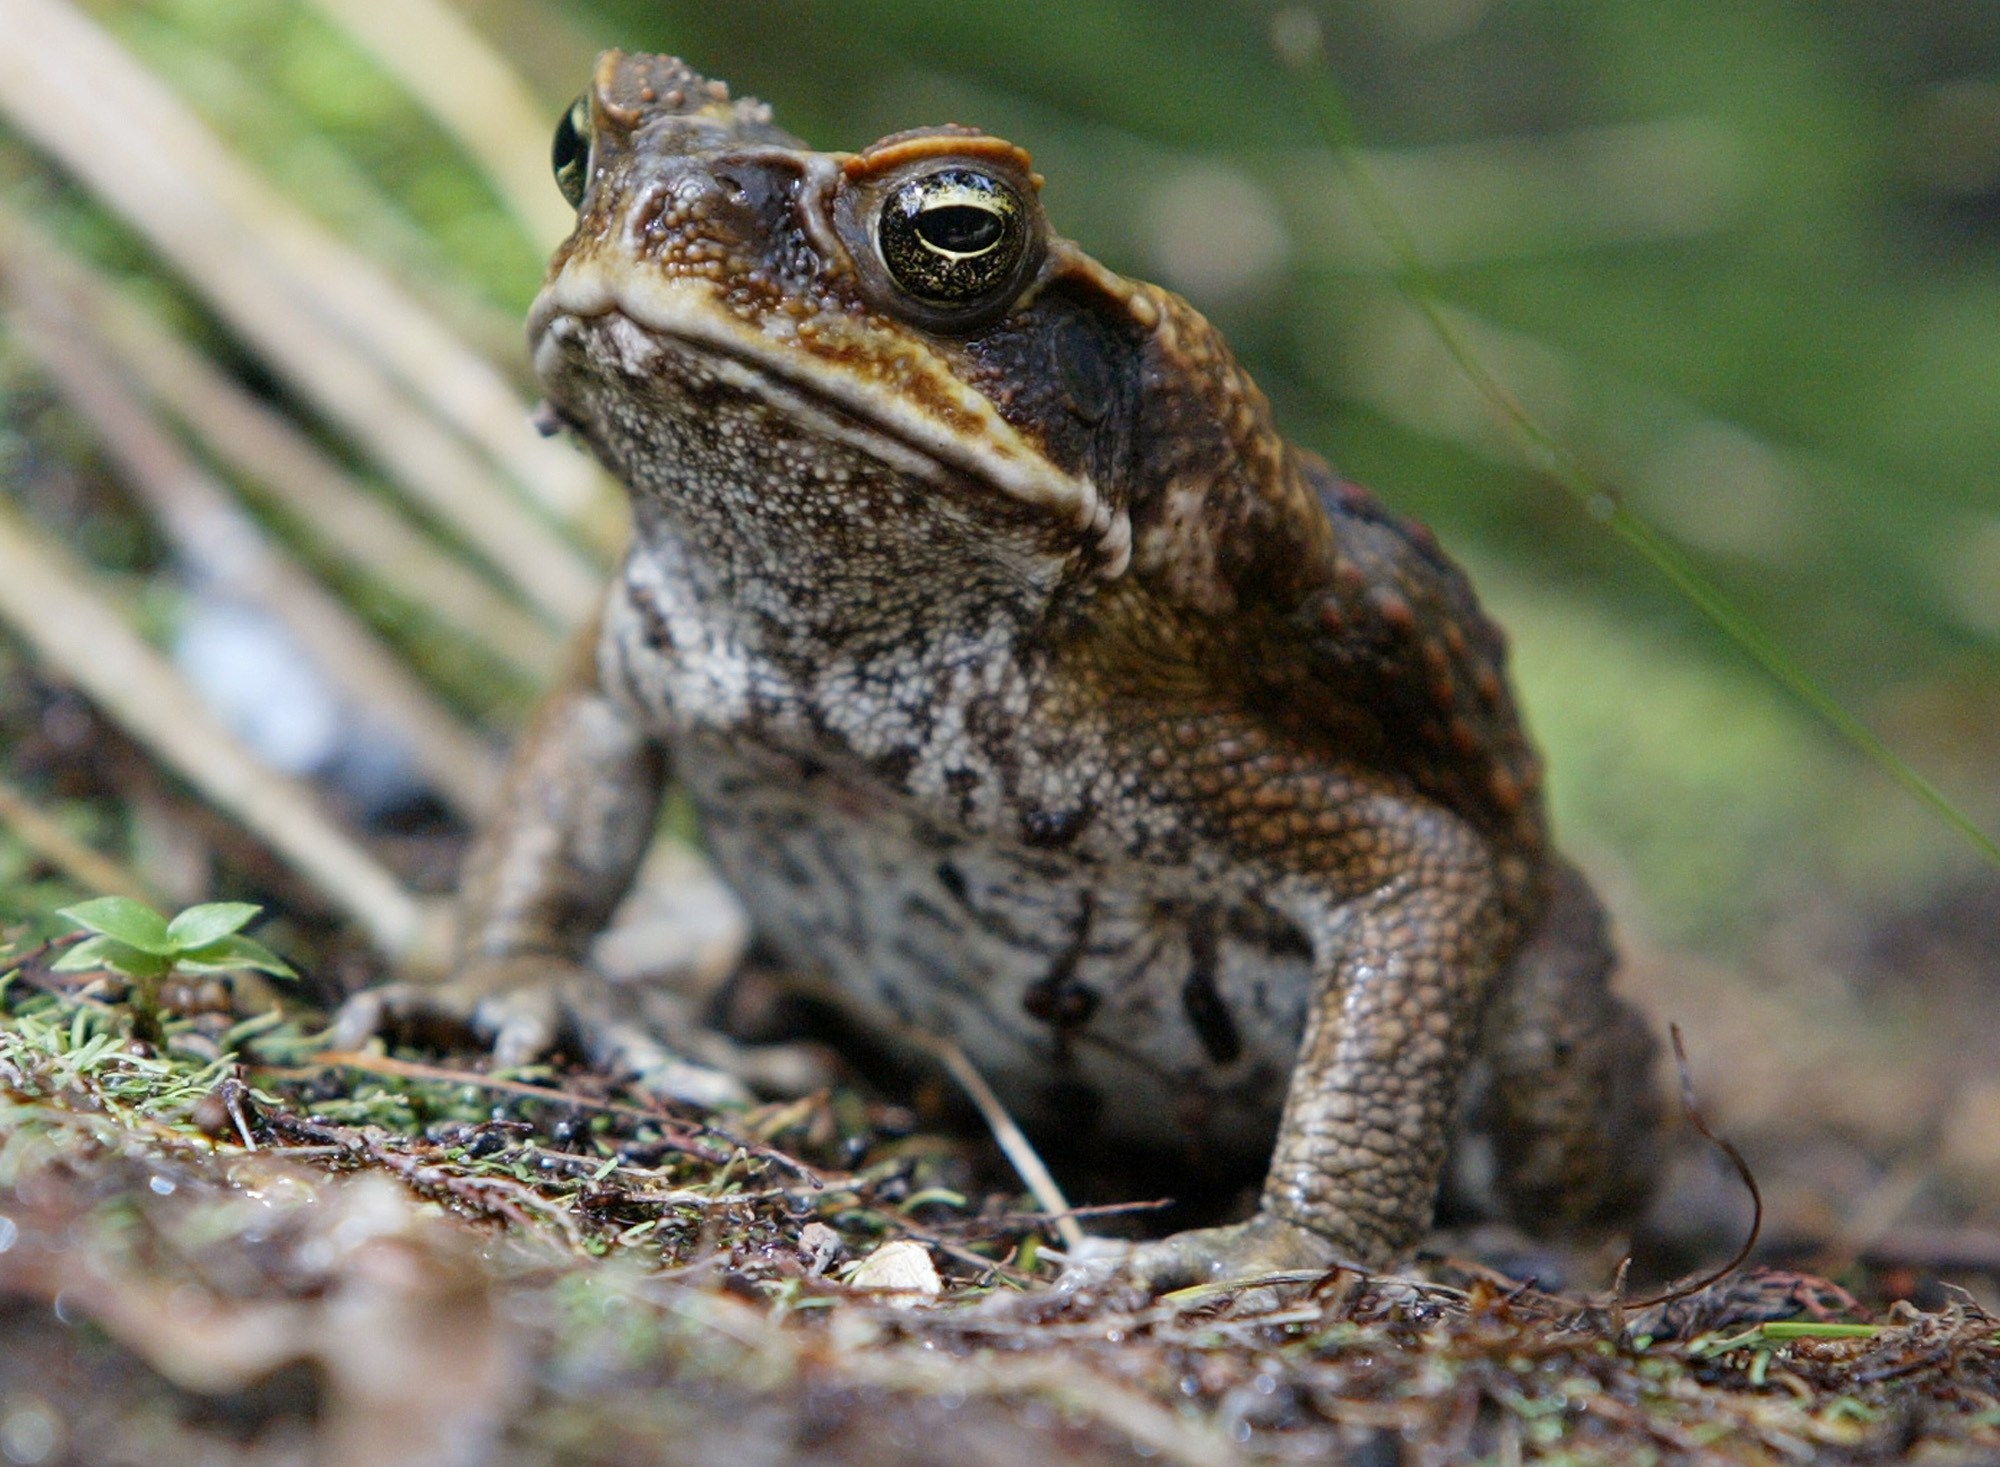 Poisonous Toads Infest Suburban Florida Neighborhood Weny News 1719